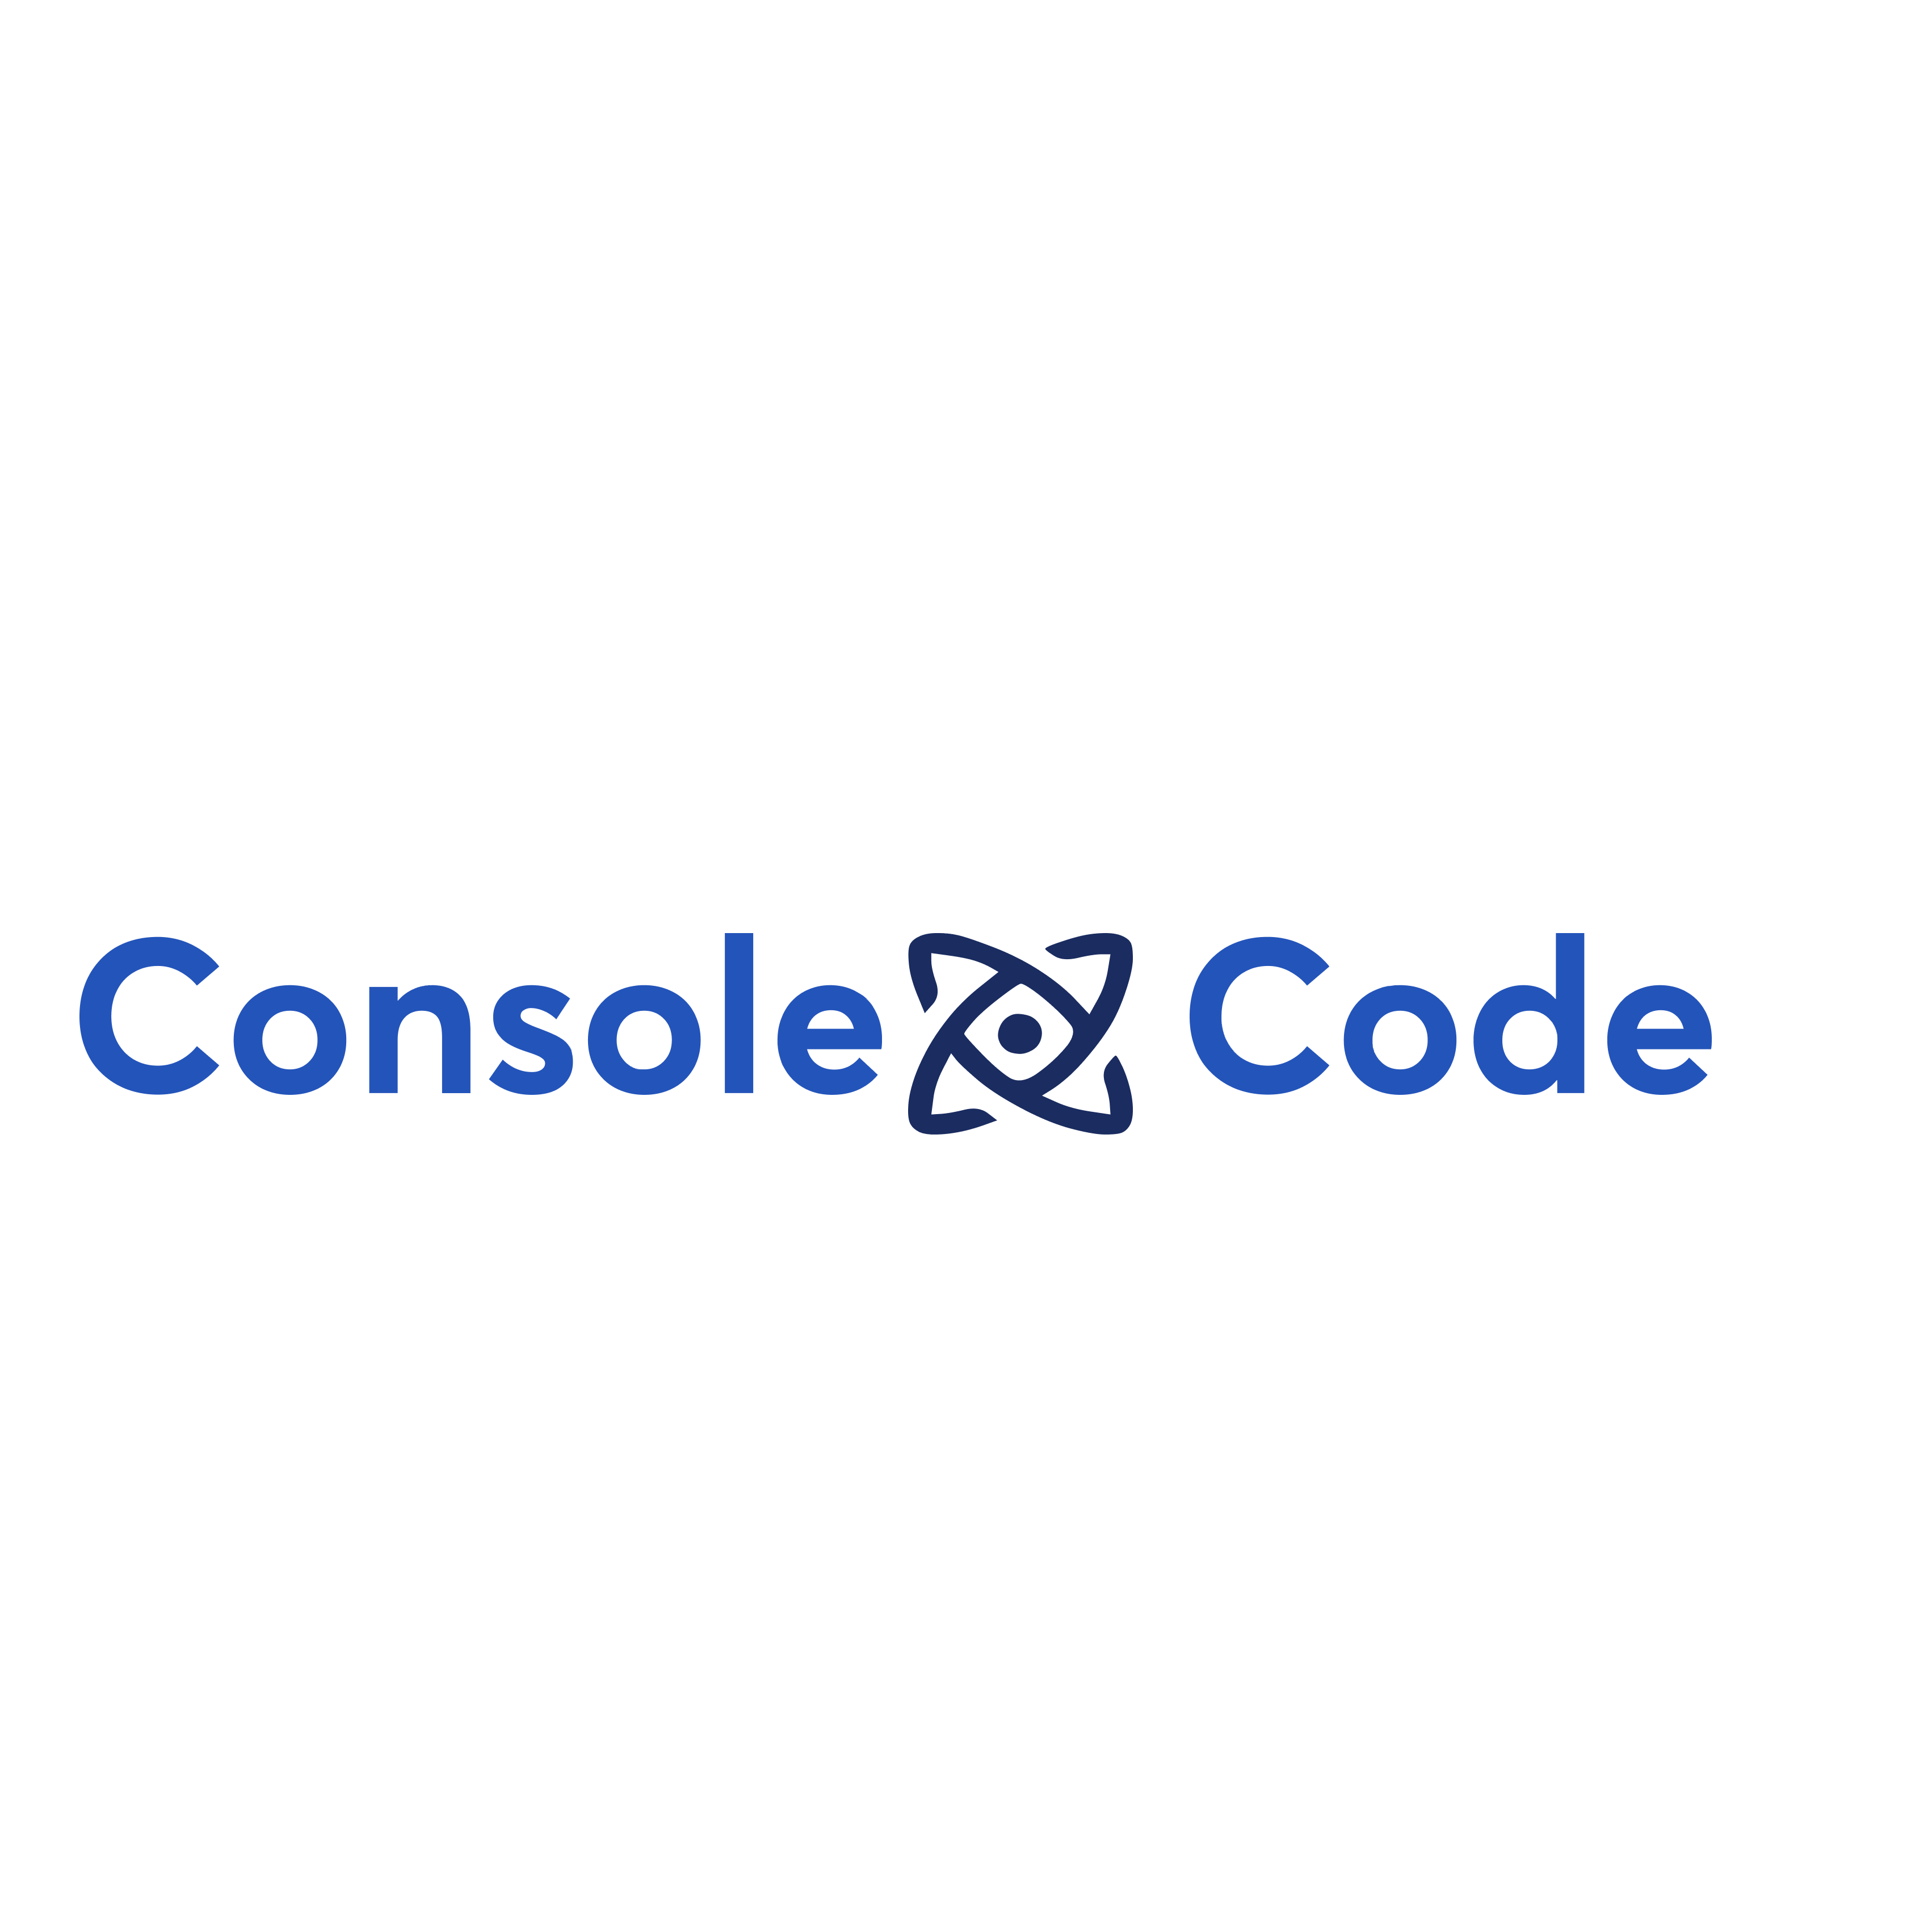 Console Code